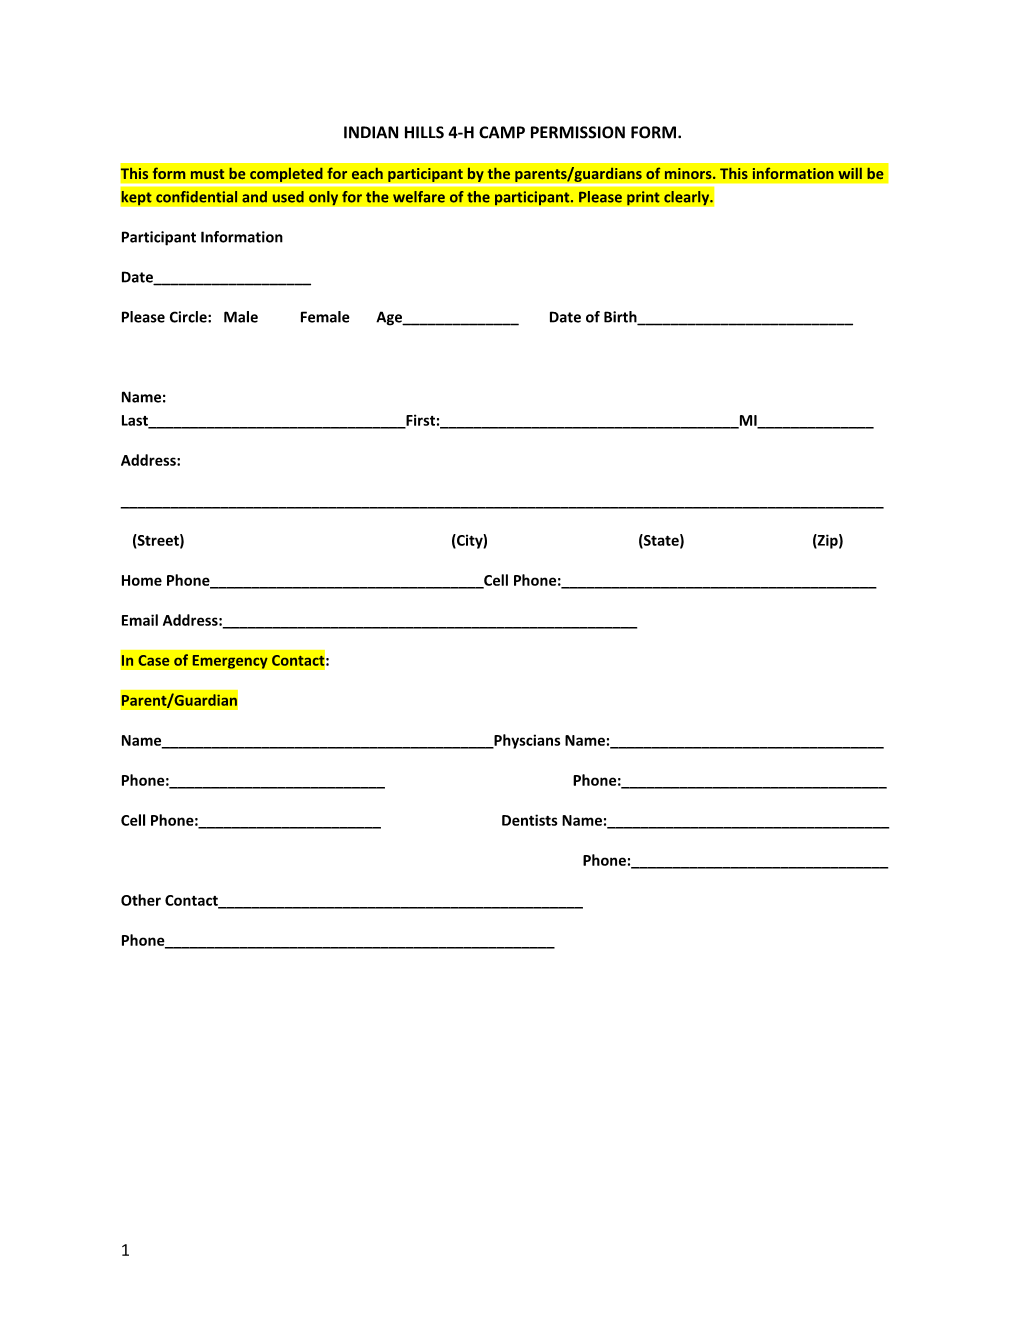 Indian Hills 4-H Camp Permission Form